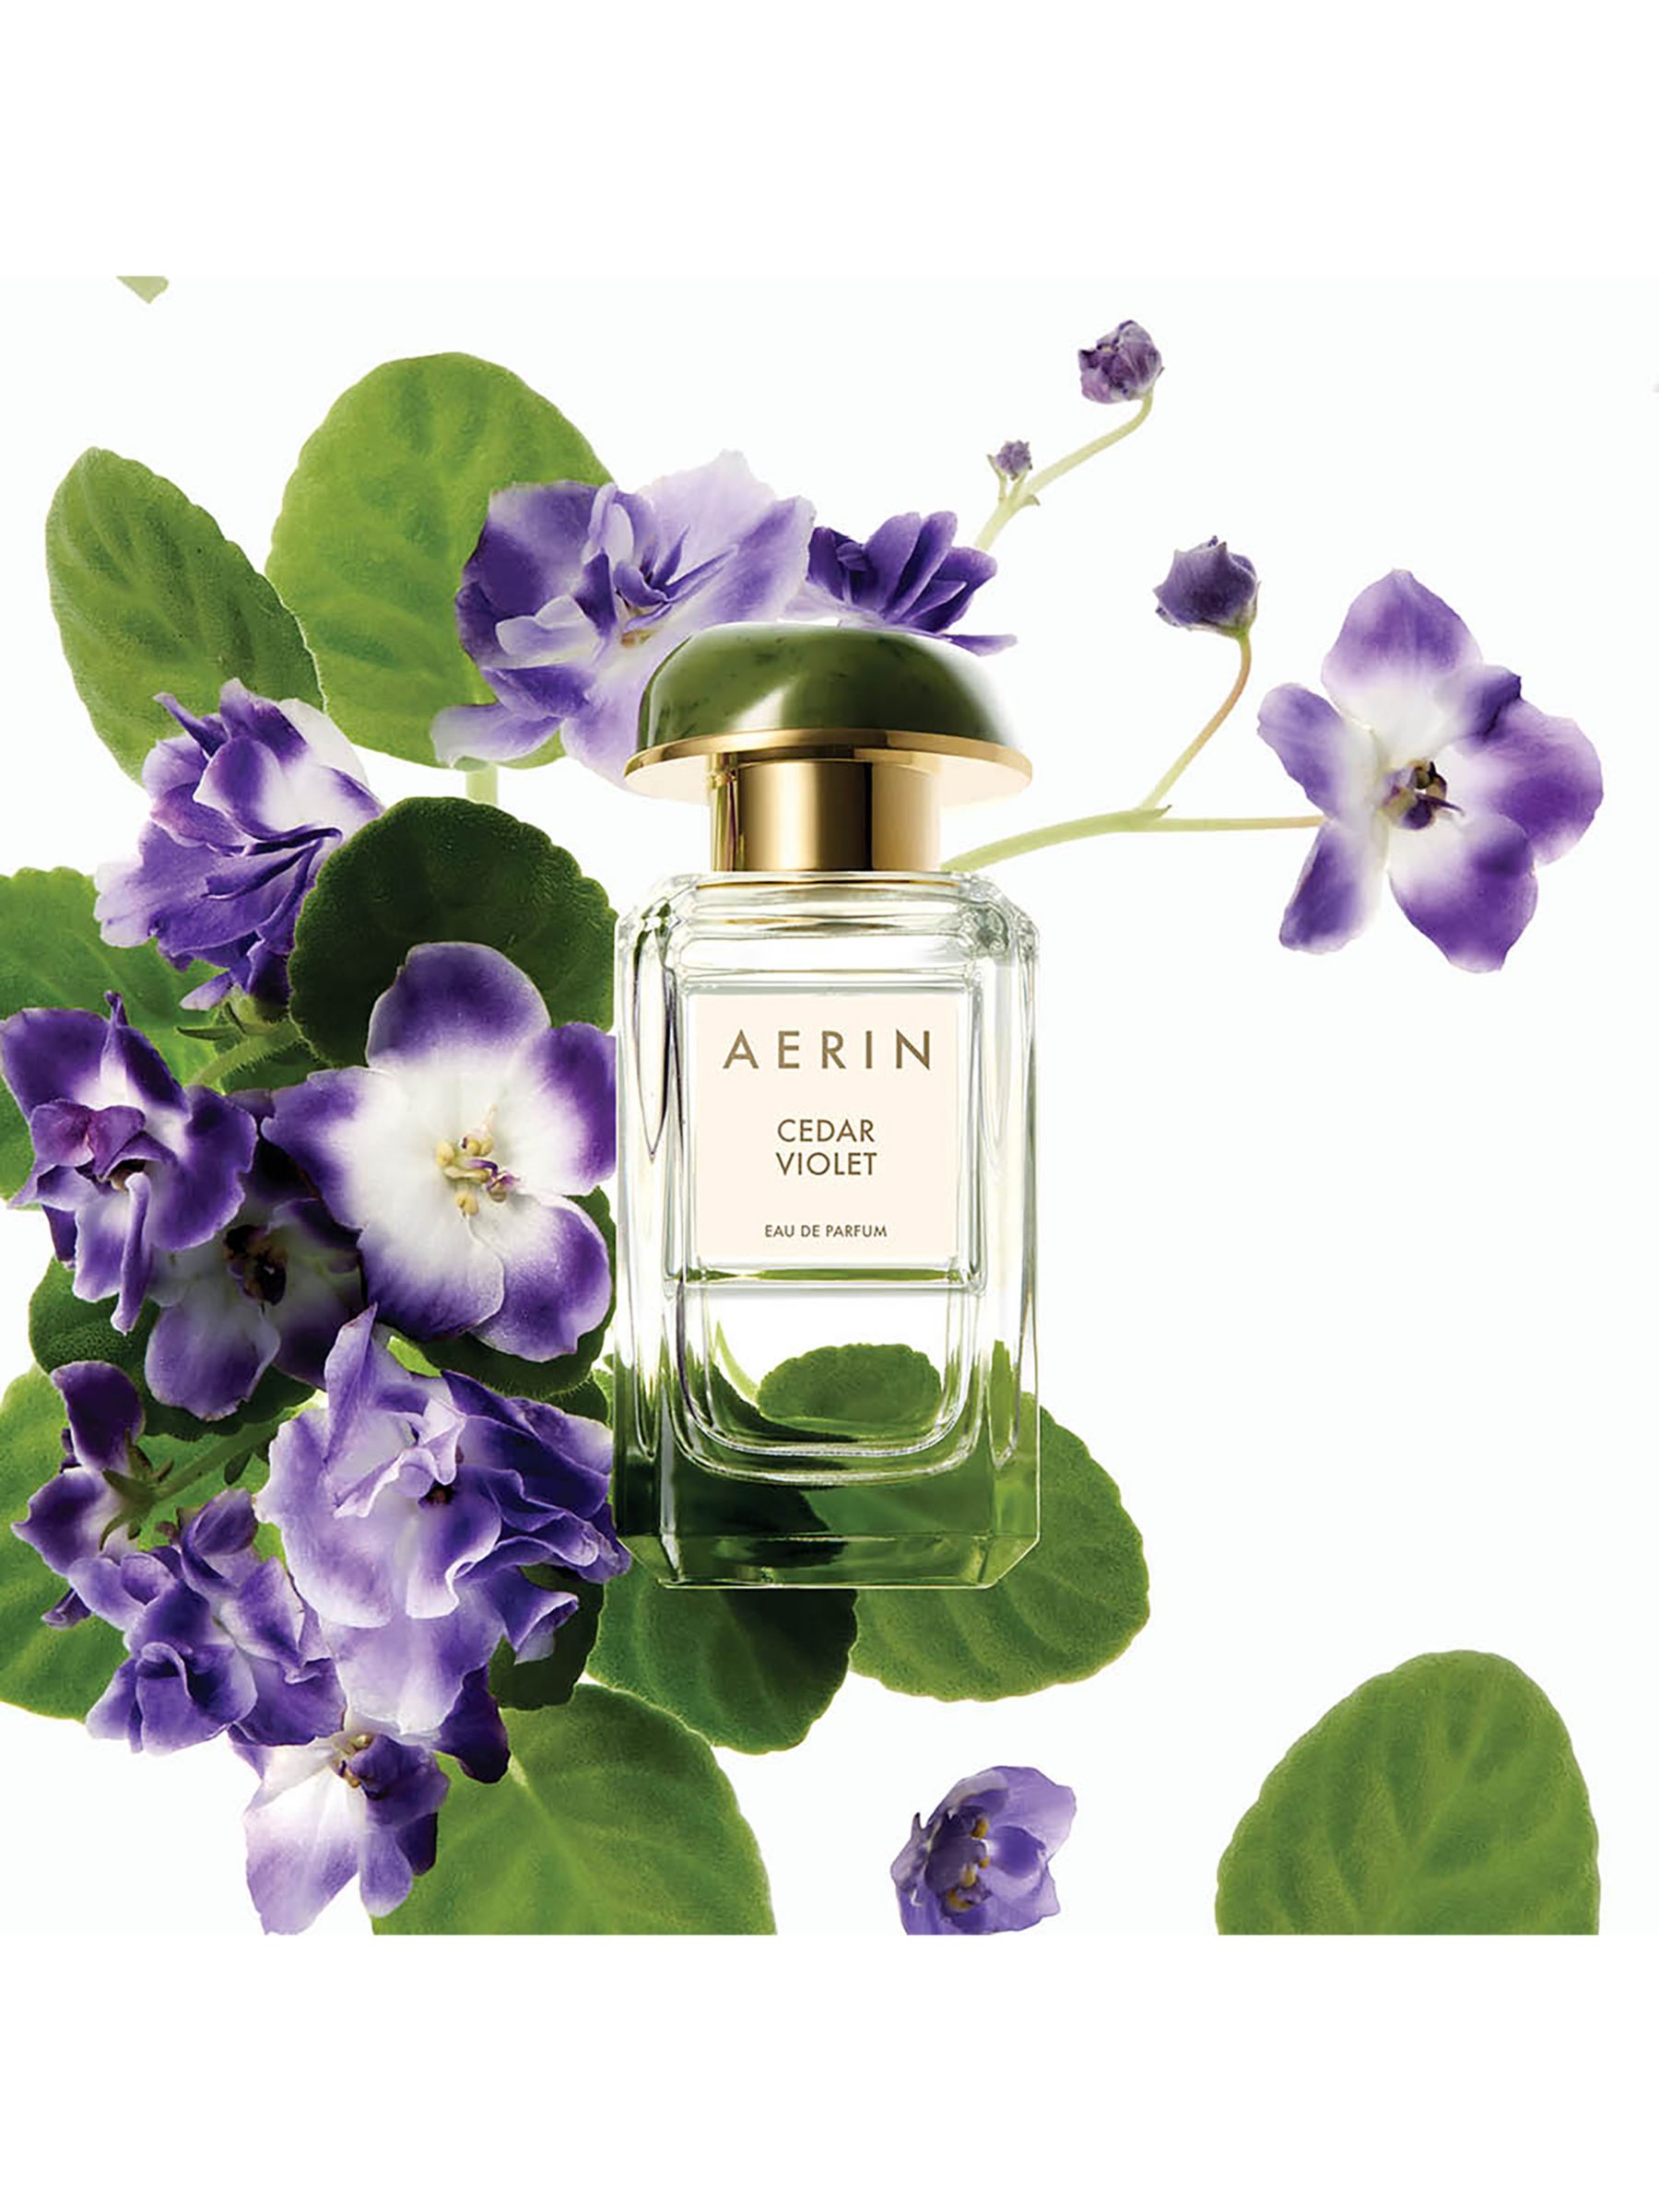 AERIN Cedar Violet Eau de Parfum, 50ml 2